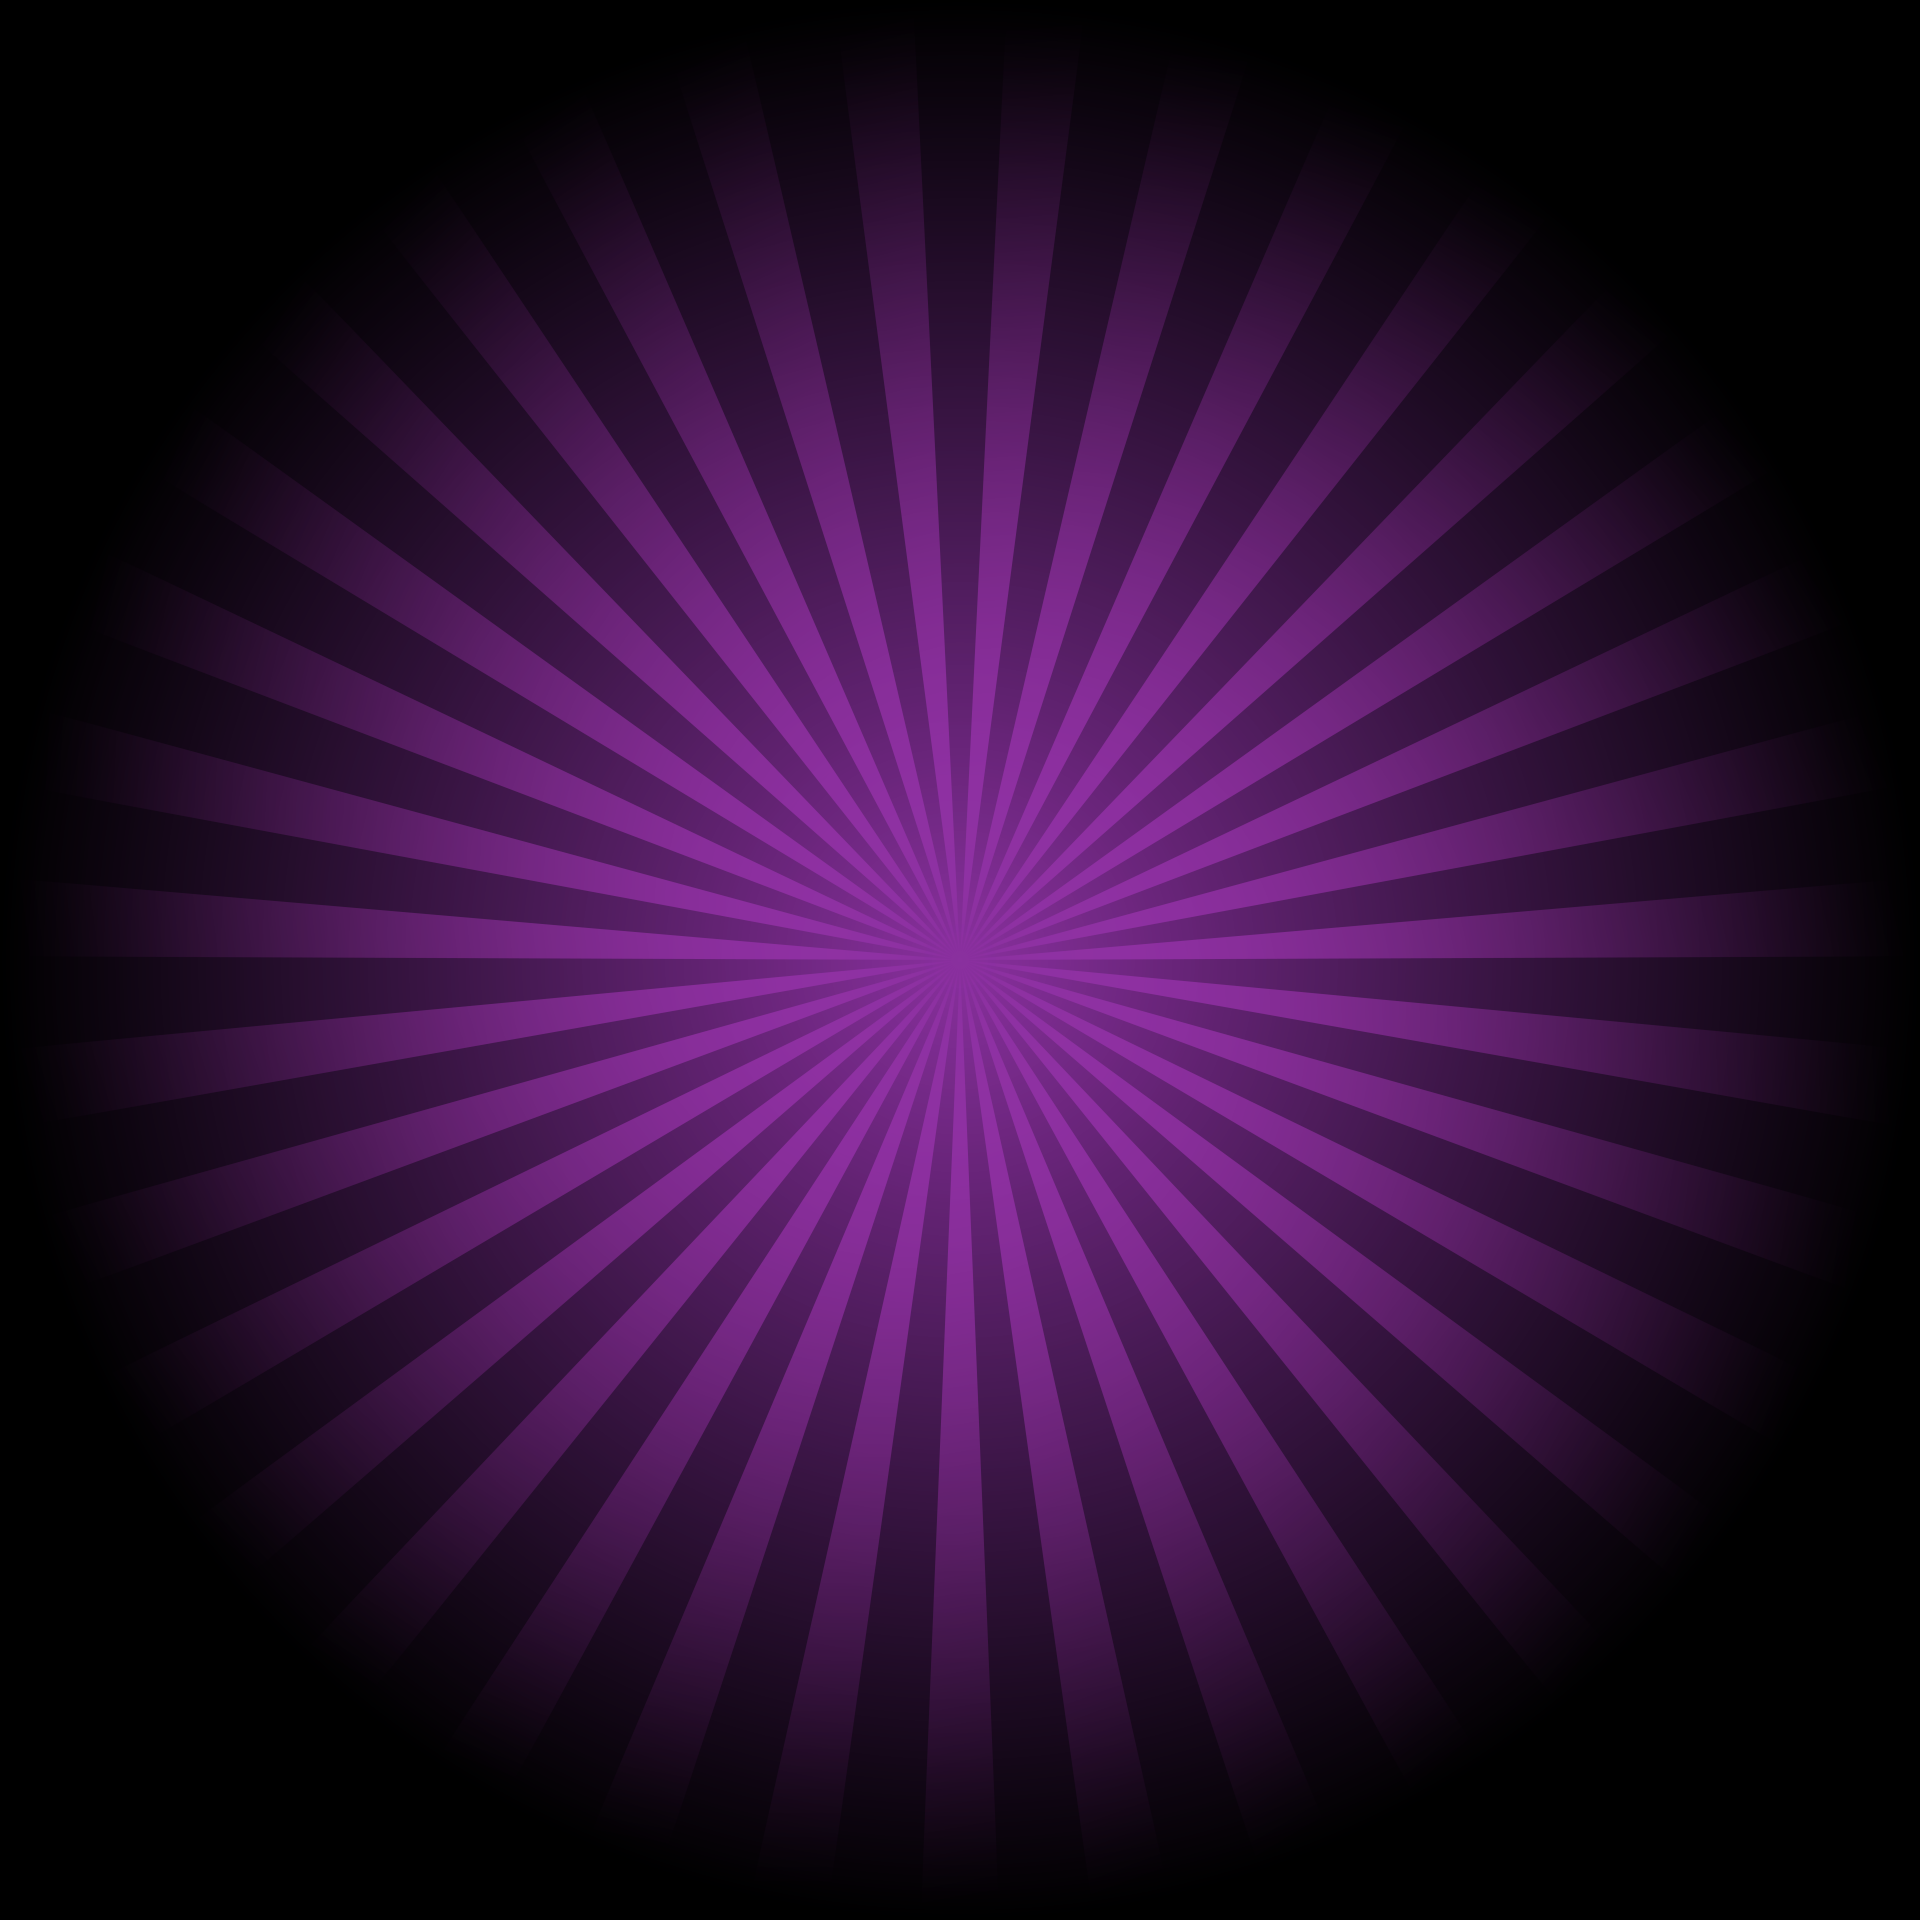 Purple starburst illustration on black background